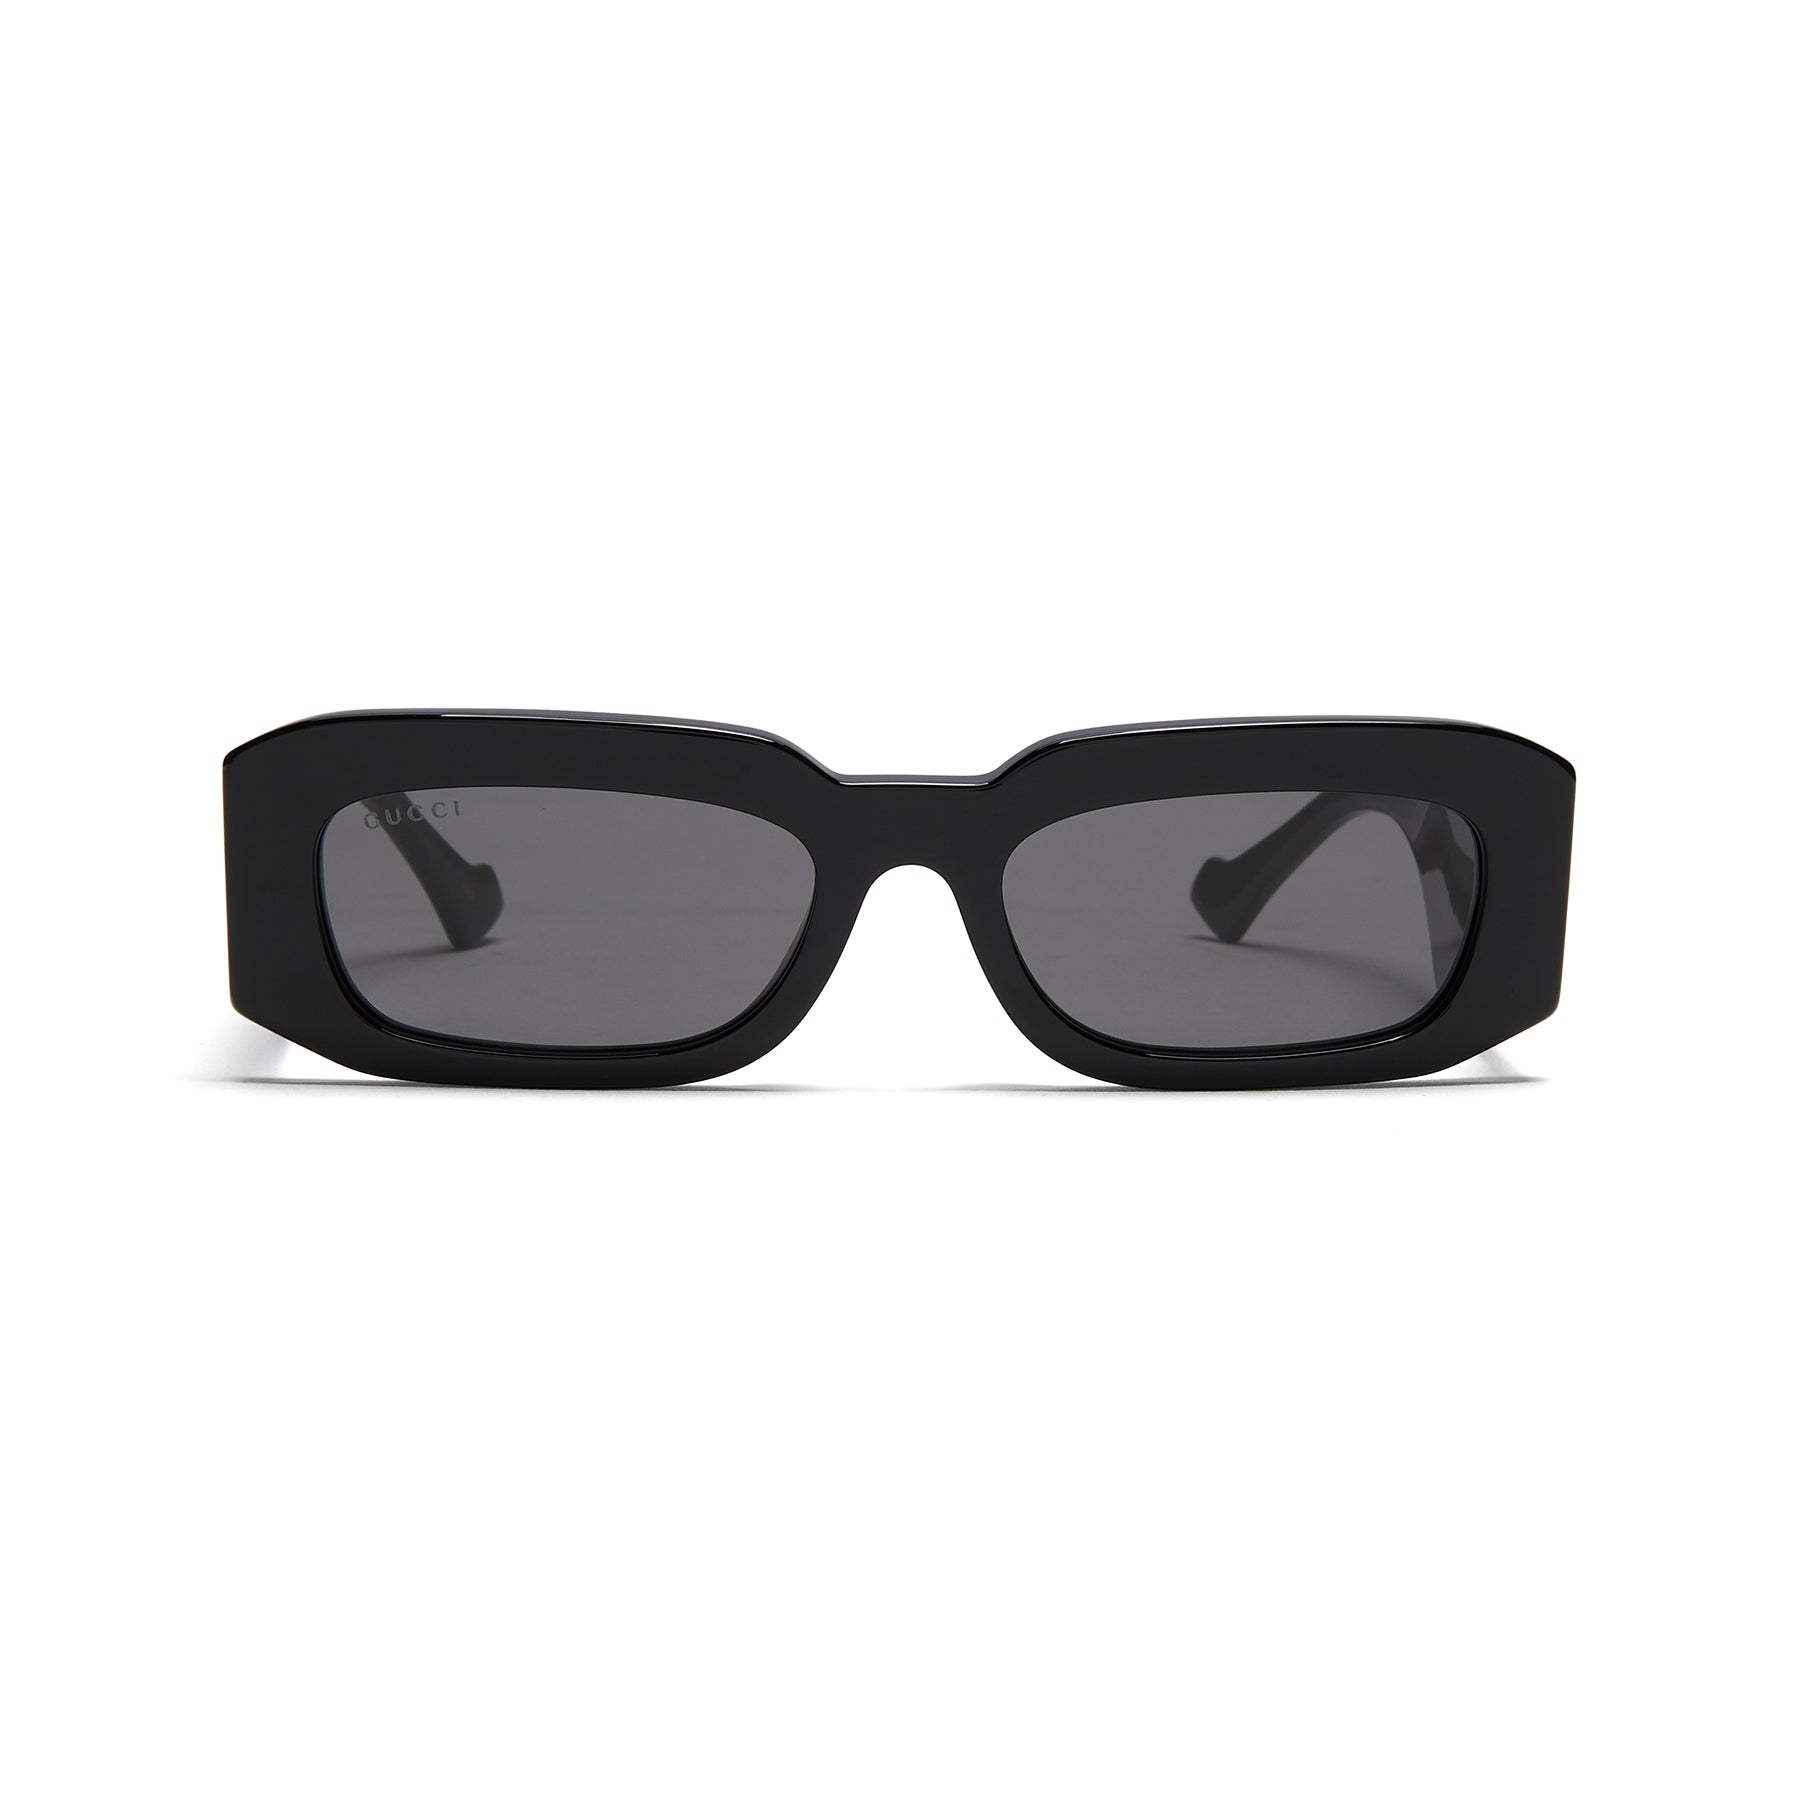 Gucci Rectangle Frame Sunglasses in Black